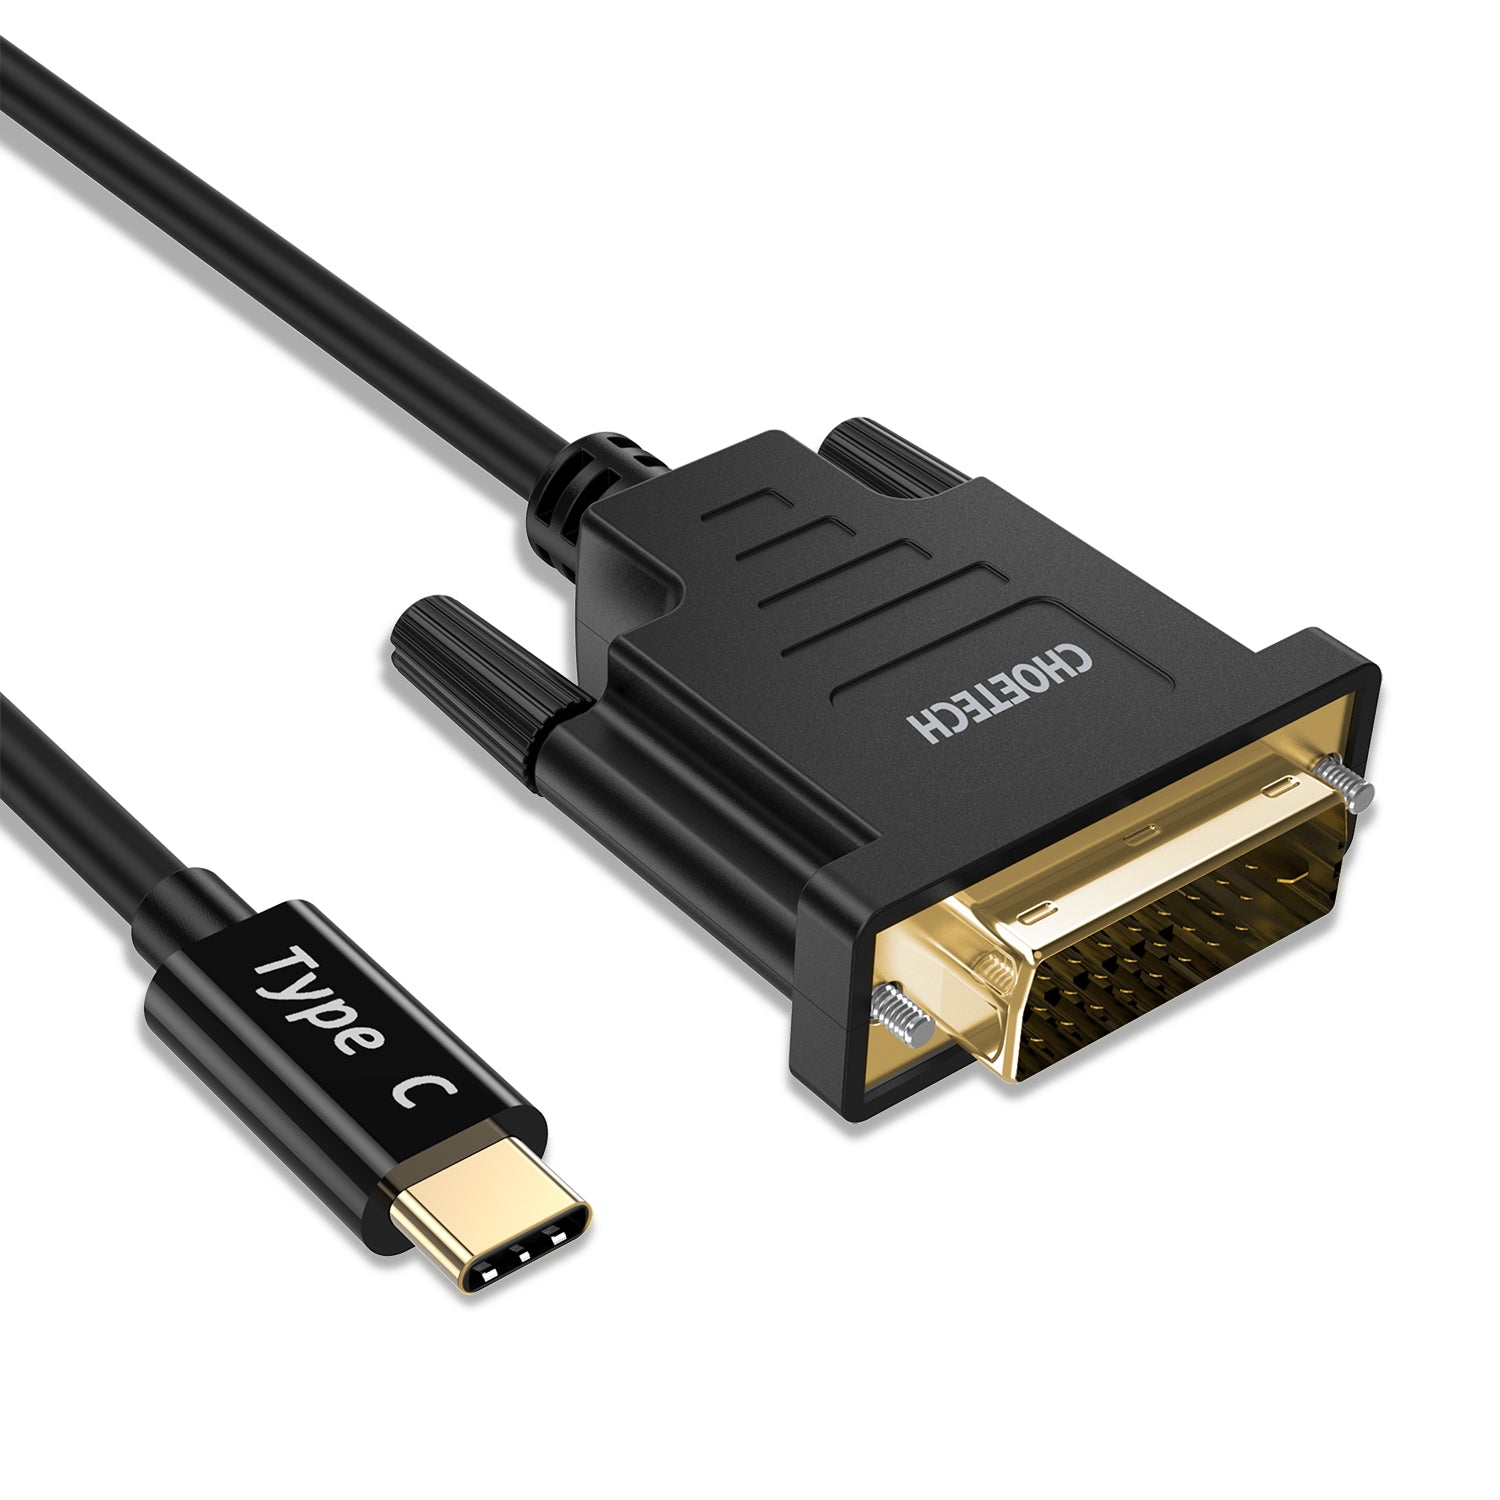 XCD-0018 CHOETECH USB C a DVI Cable 4K@30Hz (6FT/1.8M) Adaptador USB tipo C a DVI 24+1